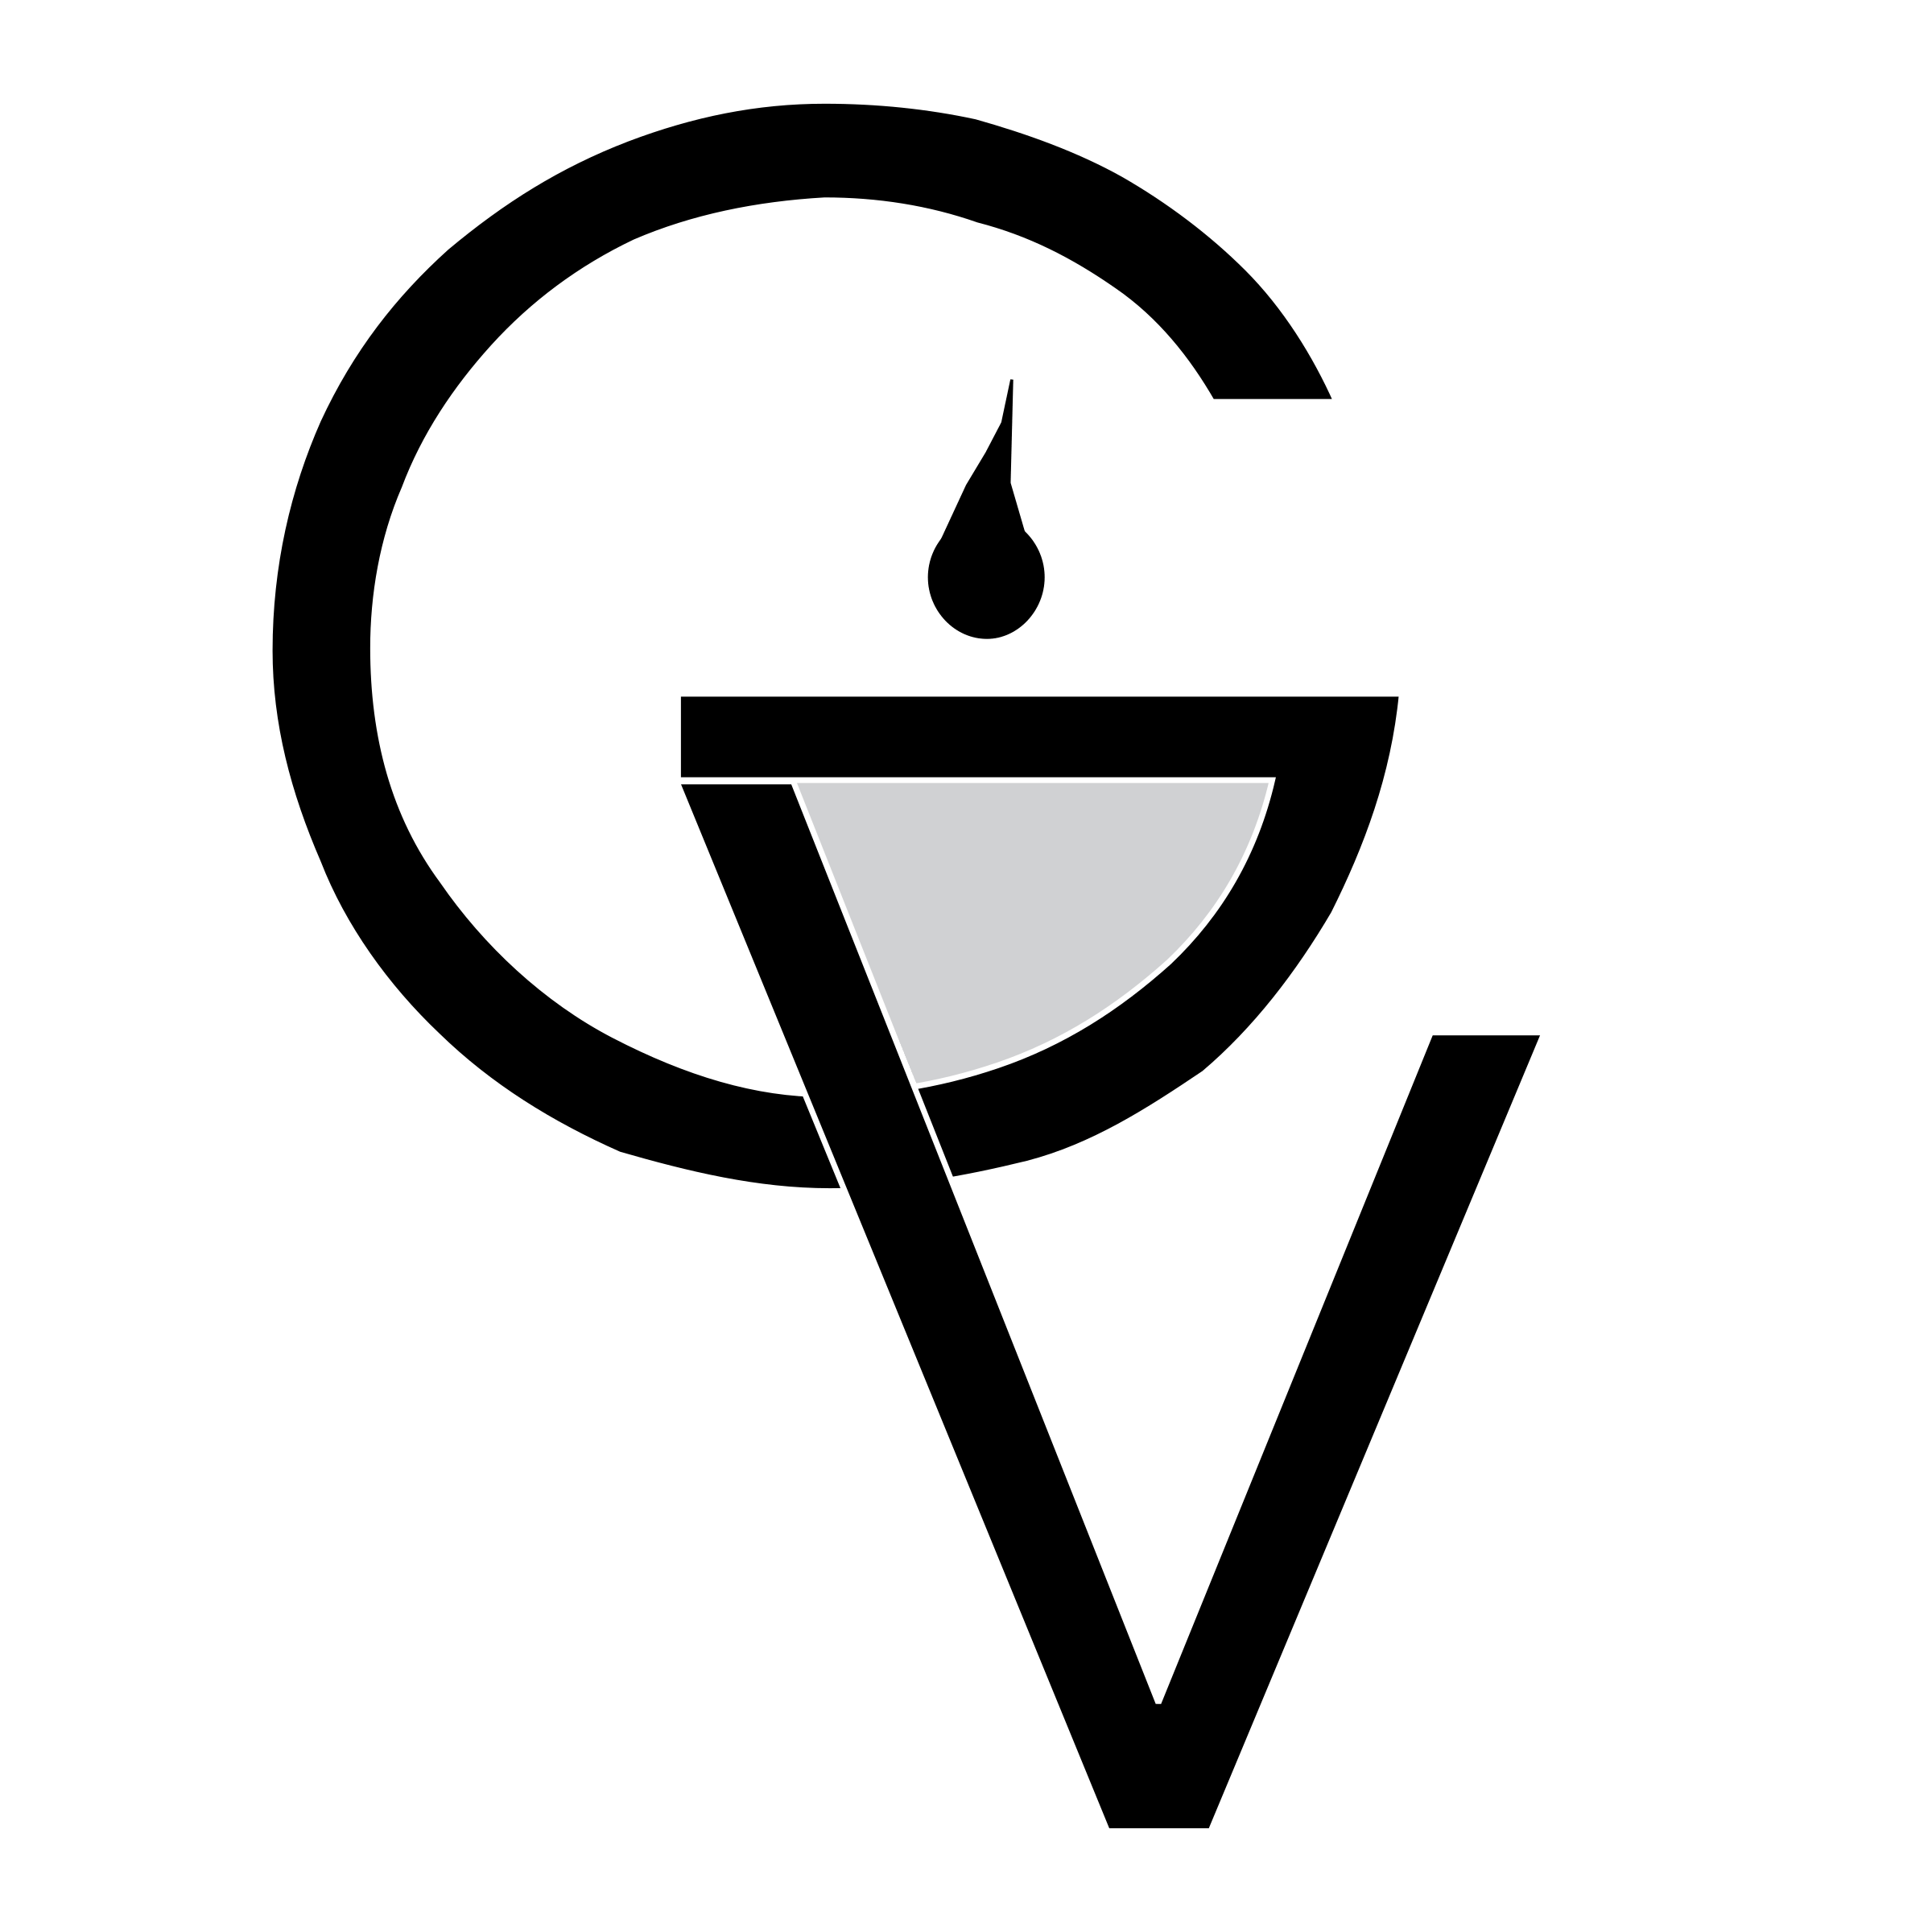 GV Logo - GV Logo PNG Transparent & SVG Vector - Freebie Supply